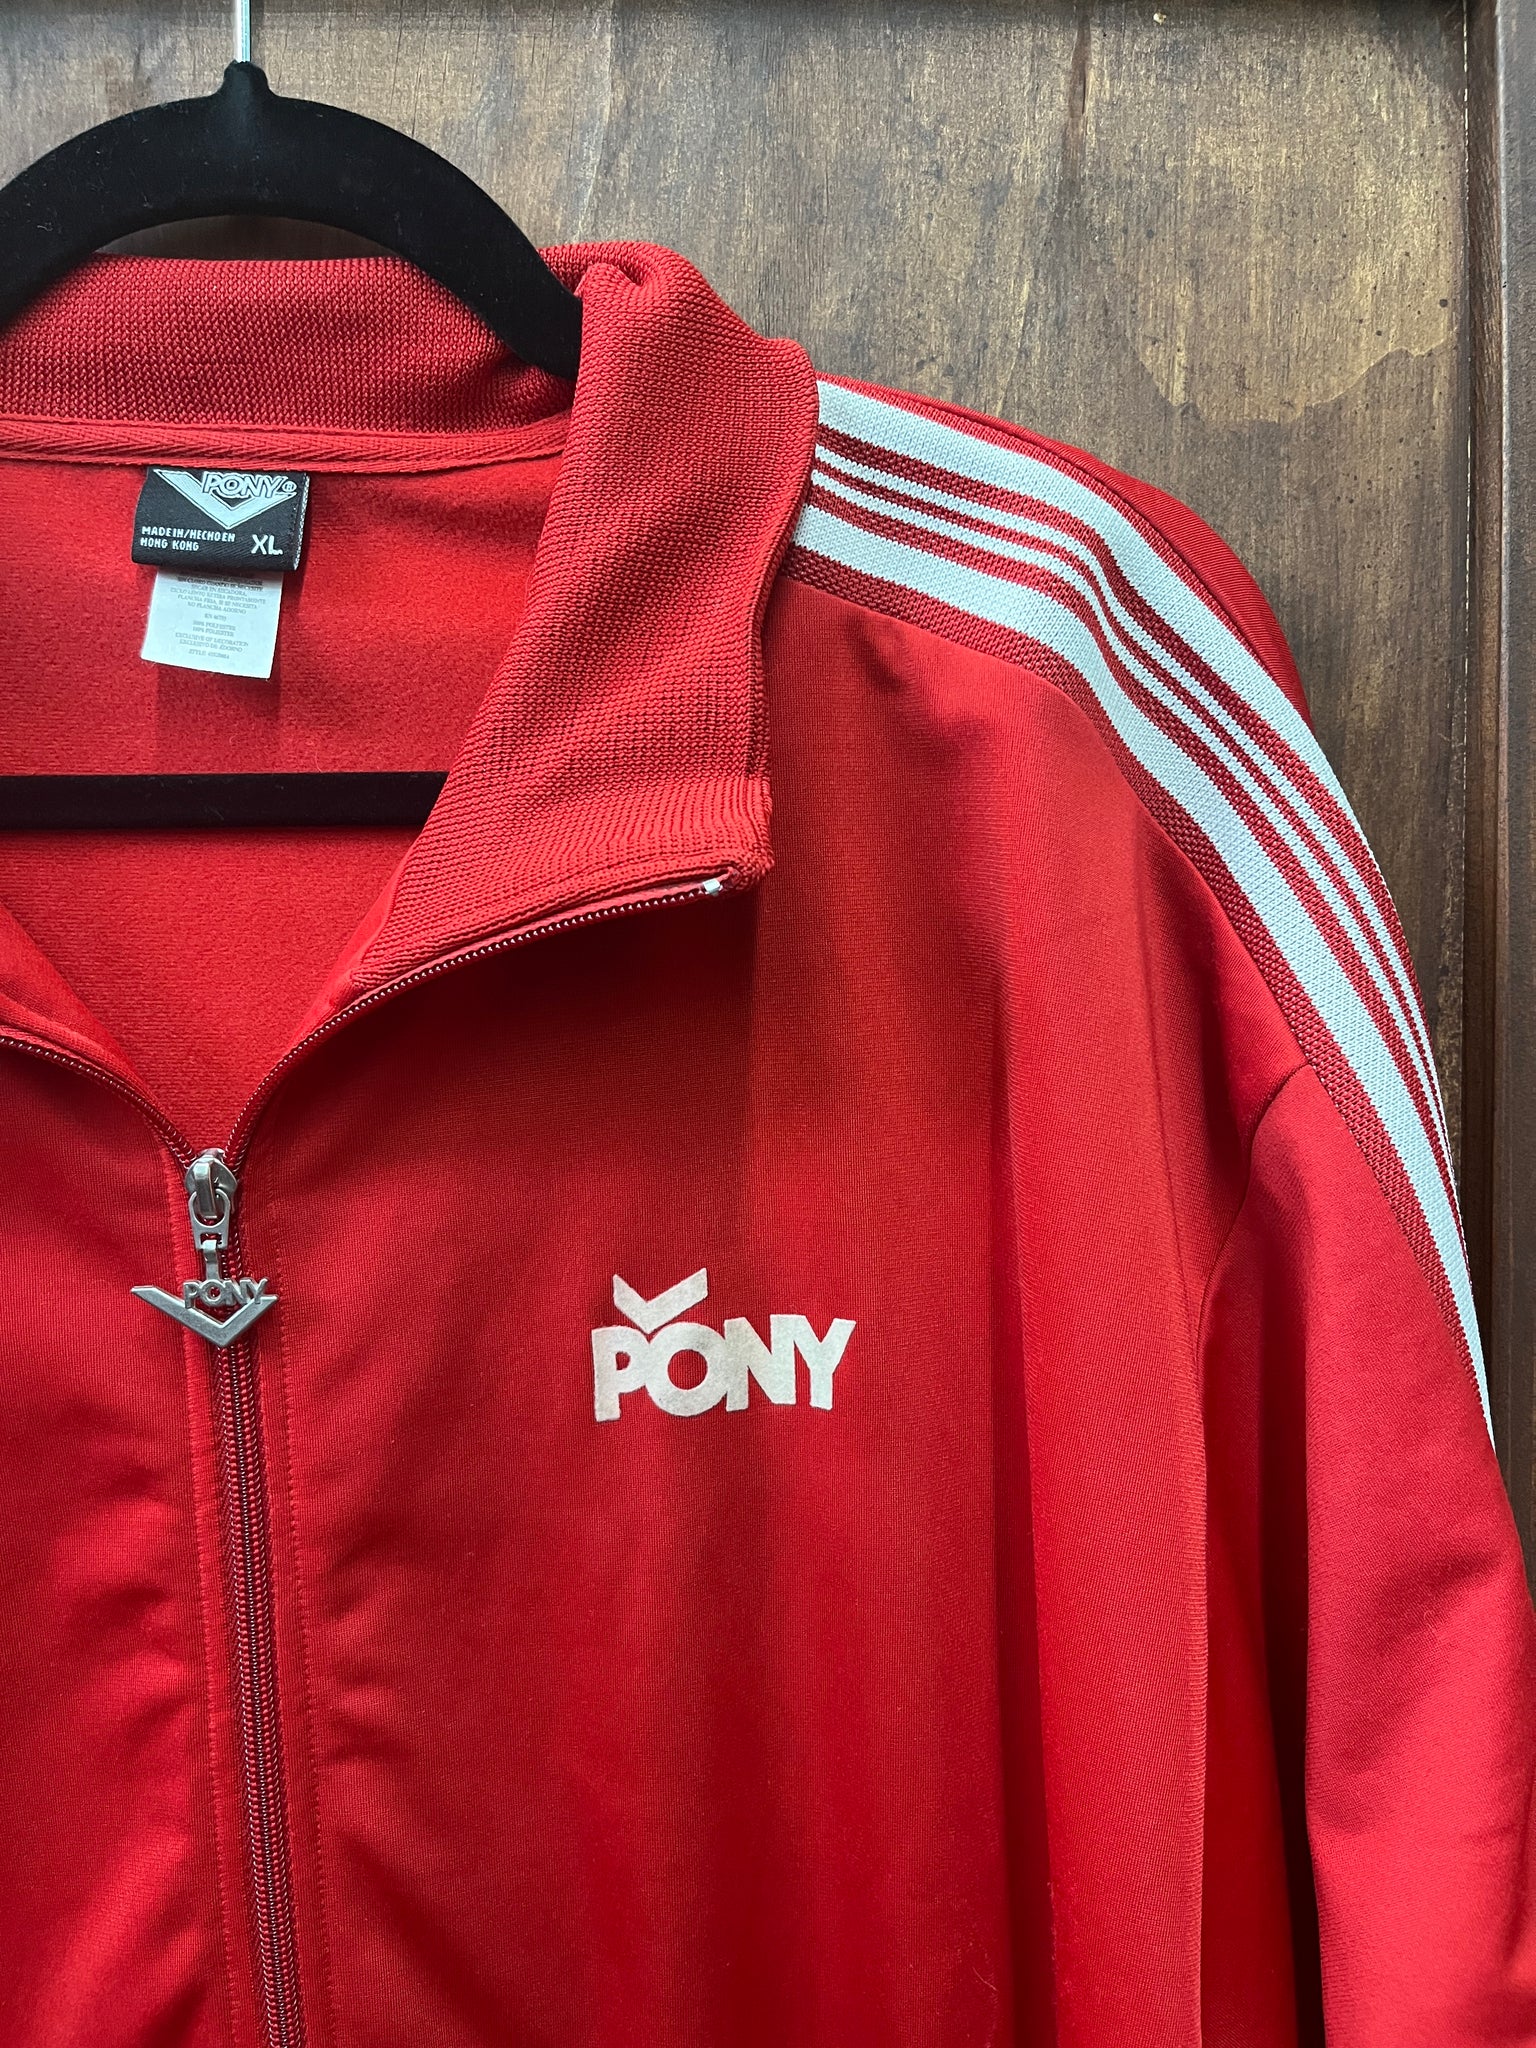 1980s MENS JACKET-Pony-red track jacket